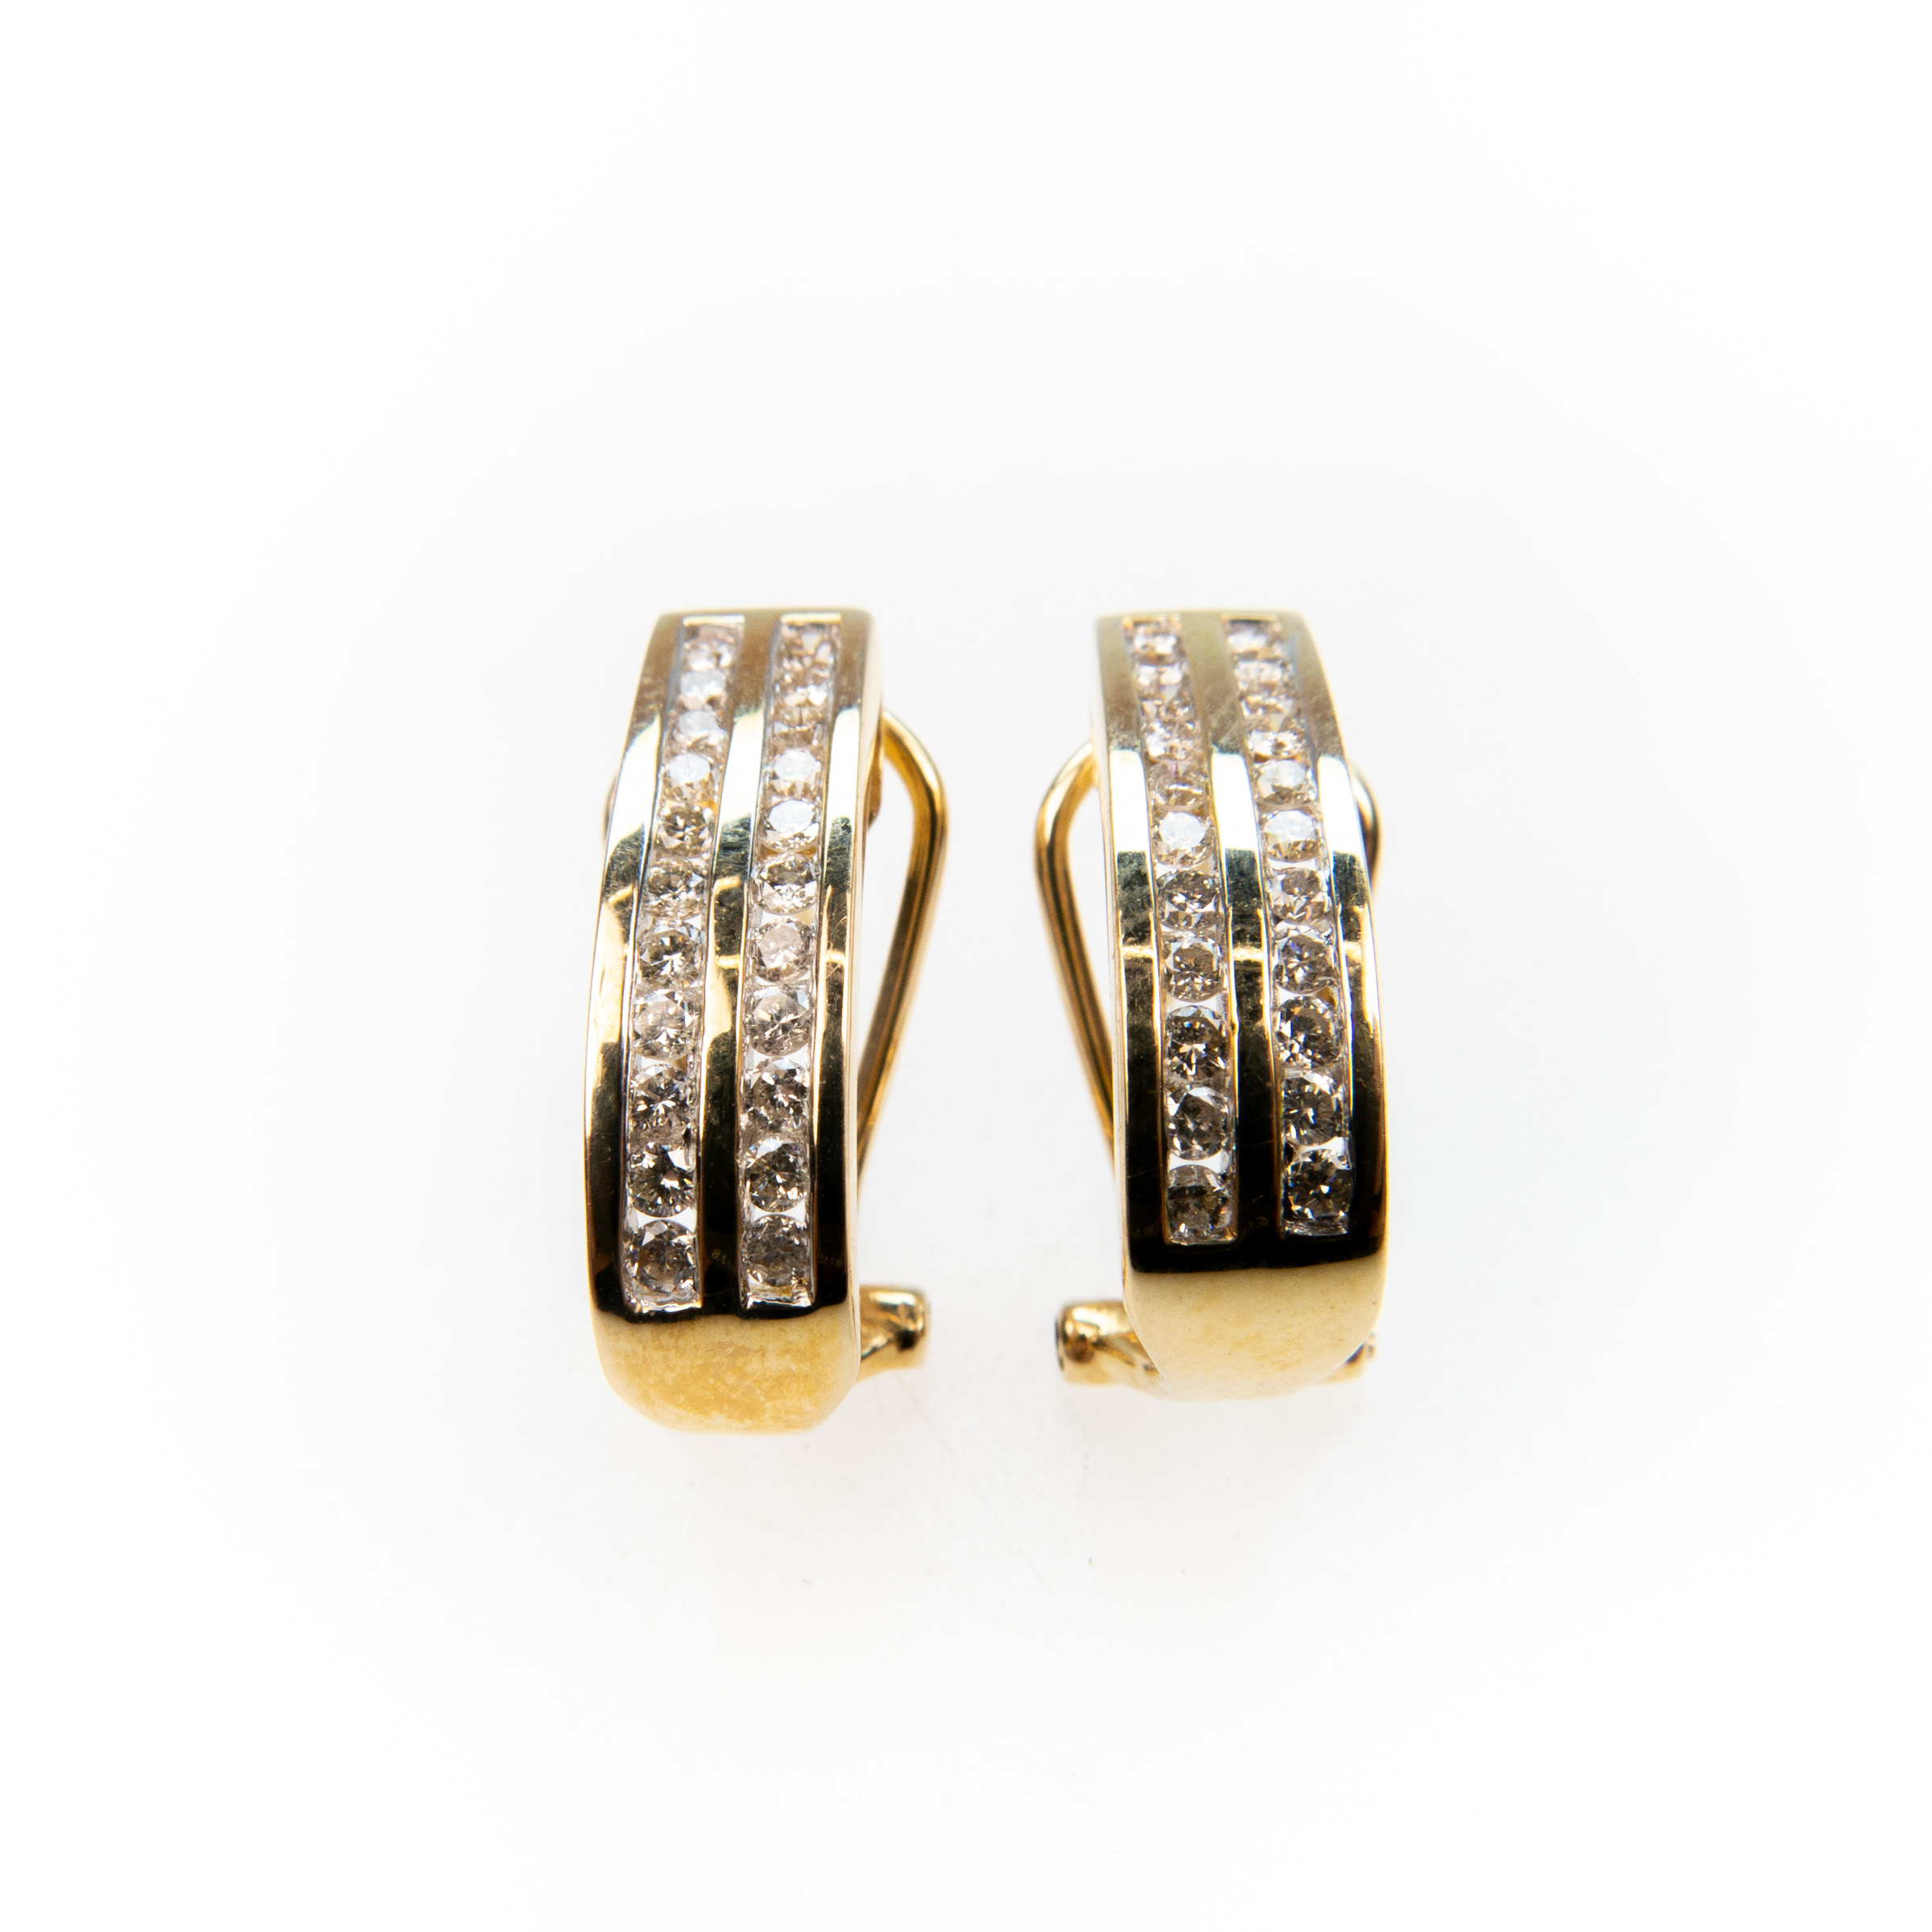 Pair Of 14K Yellow Gold Earrings